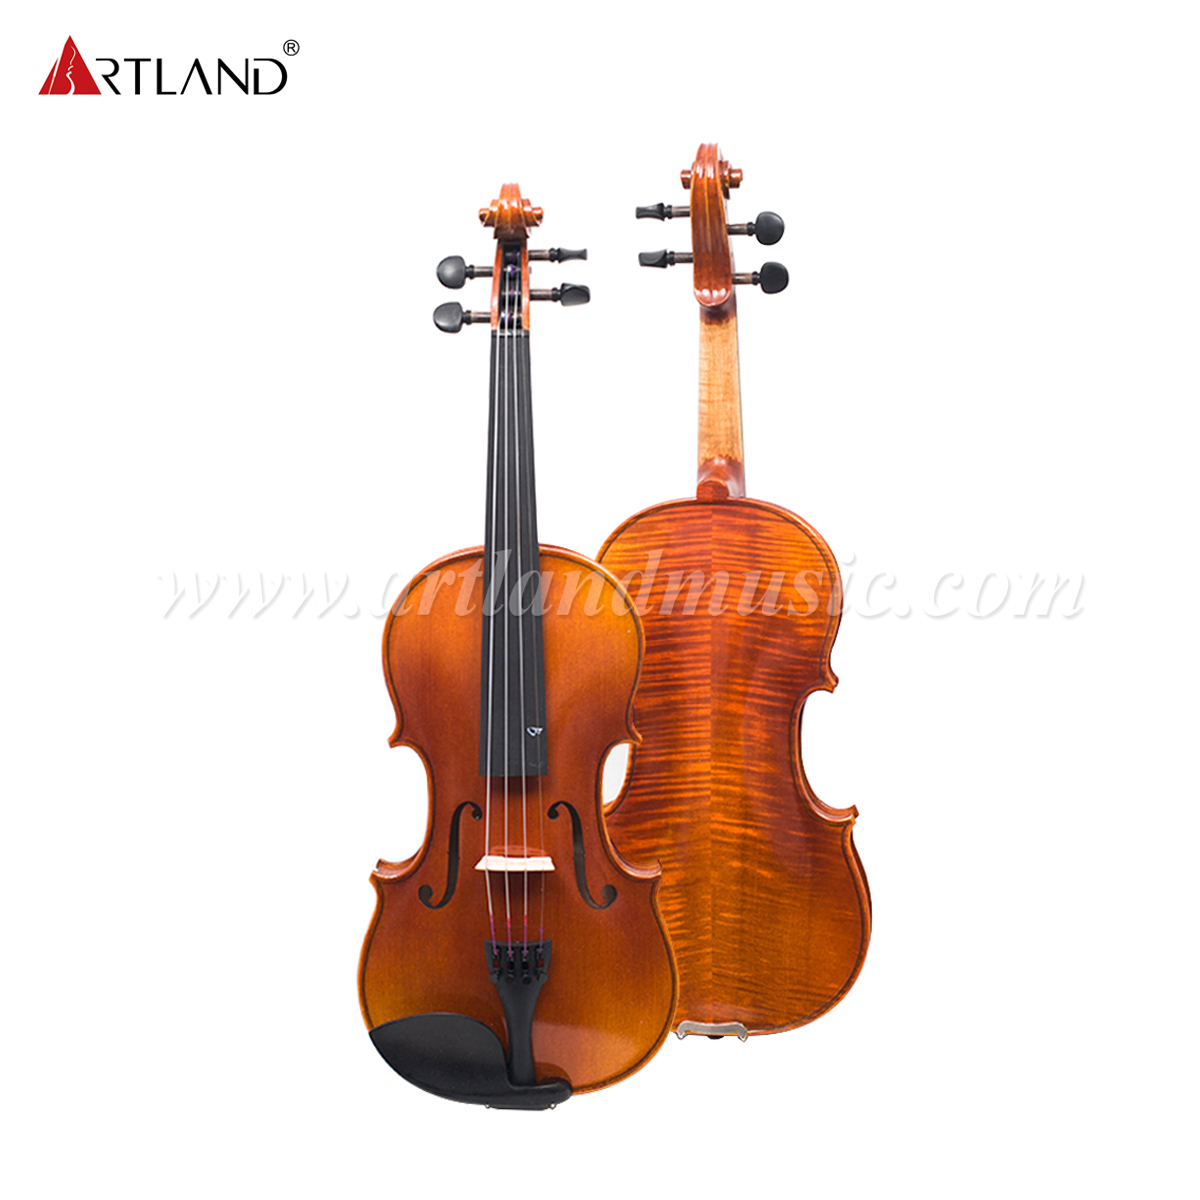 Advanced Violin with Nice Flame (AV200)